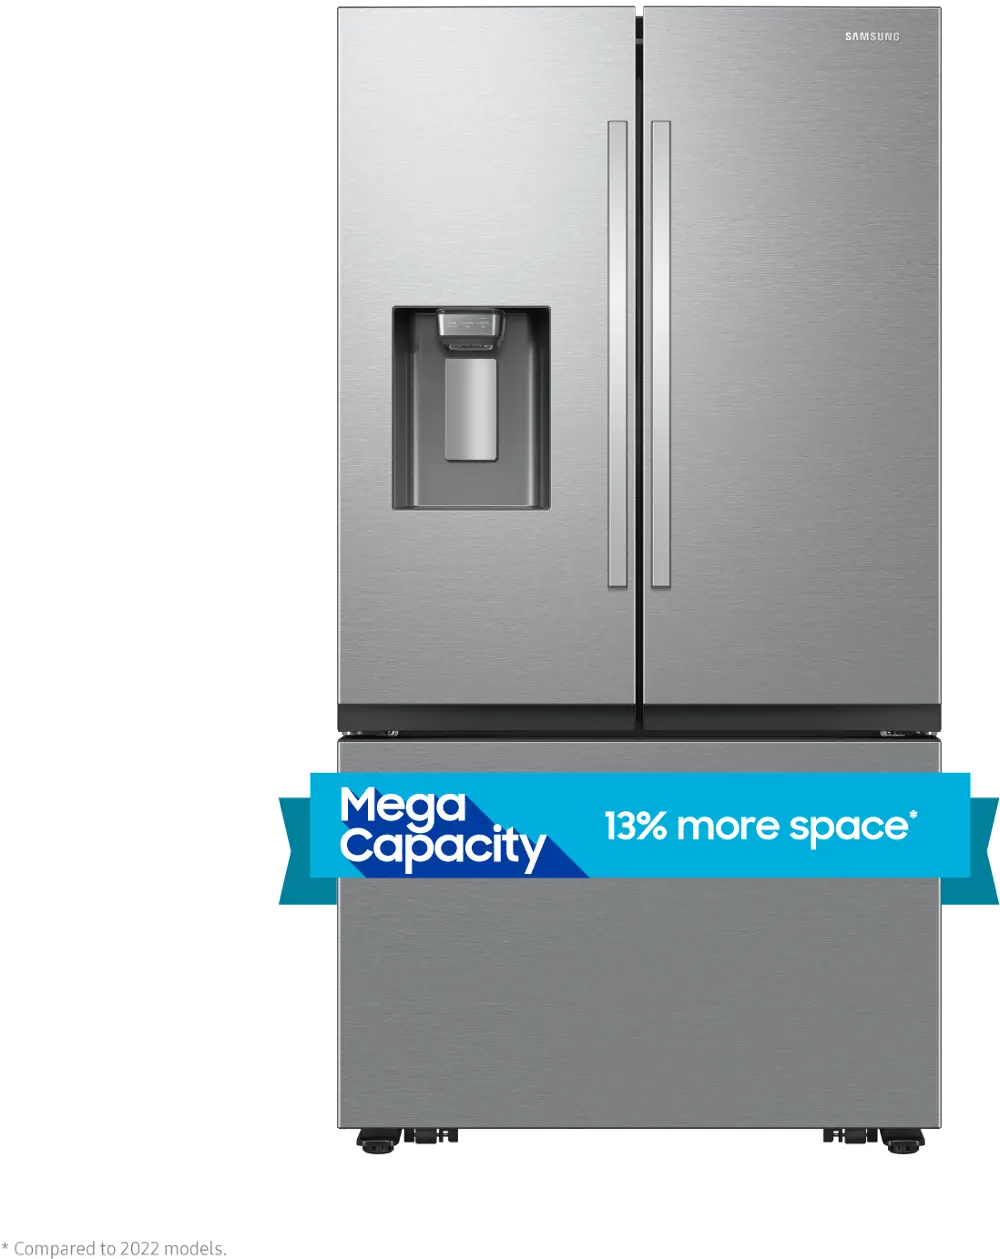 RF32CG5400SR Samsung 31 cu ft Mega Capacity French Door Refrigerator - Stainless Steel-1